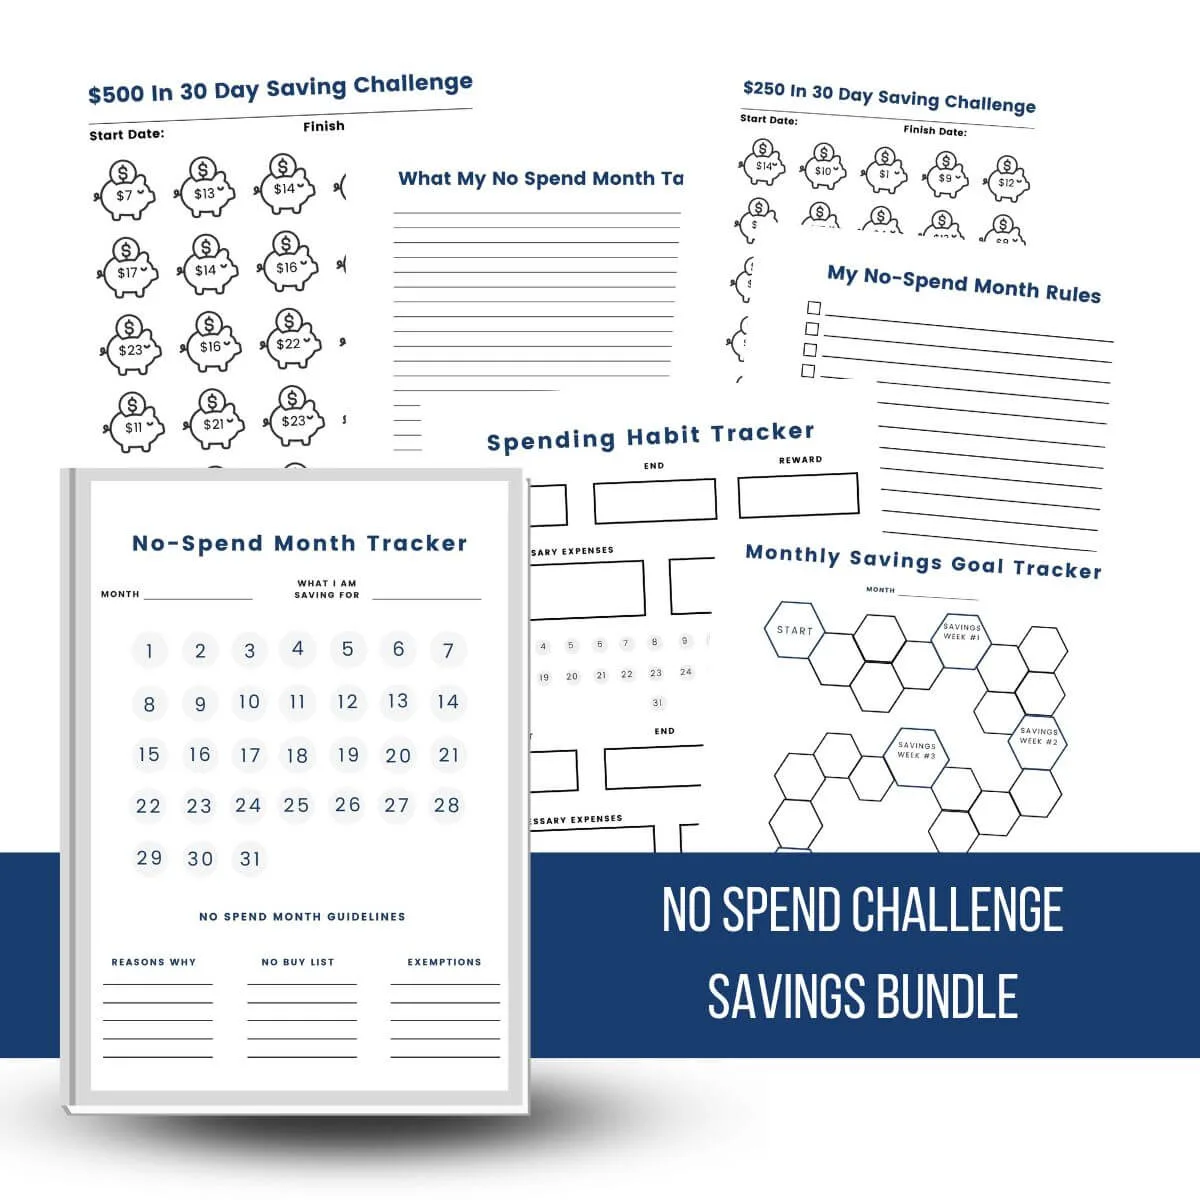 No spend challenge printable bundle sale image